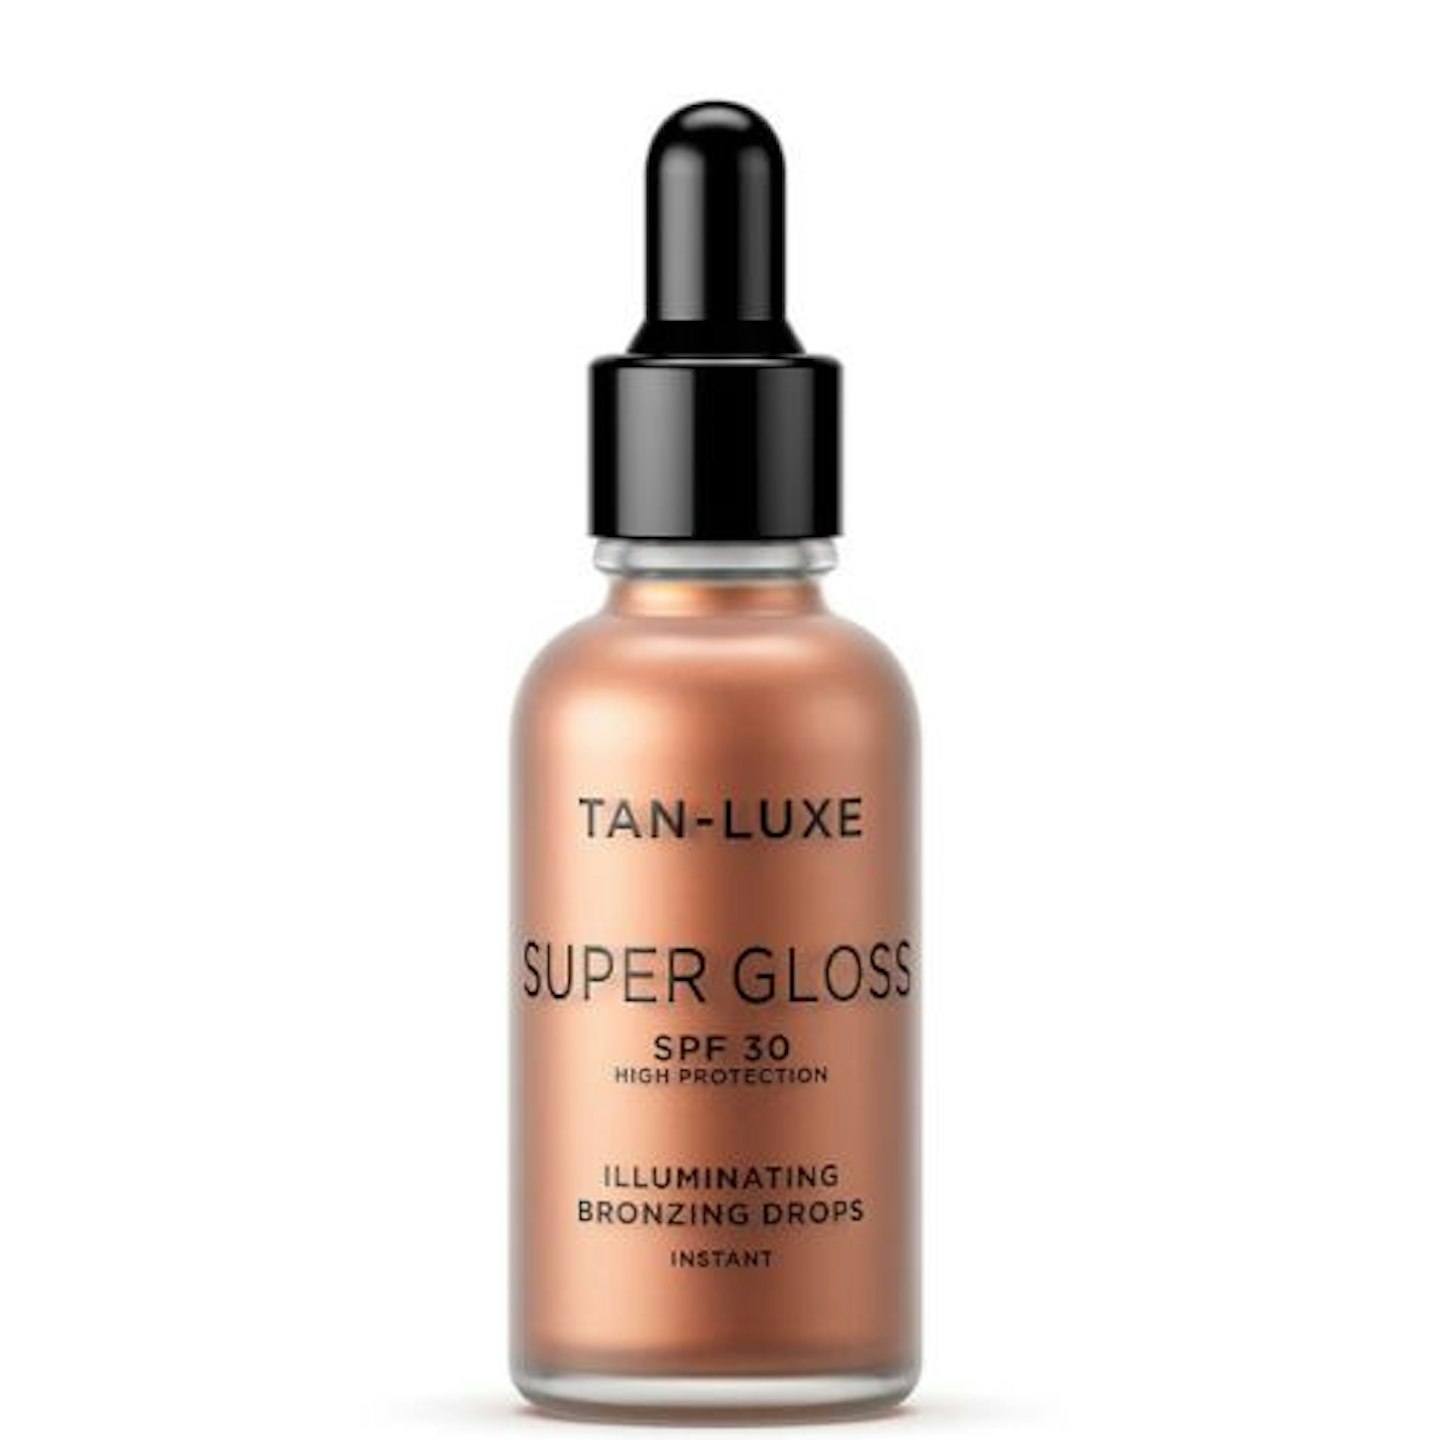 Tan-Luxe Super Gloss SPF30 Illuminating Bronzing Drops